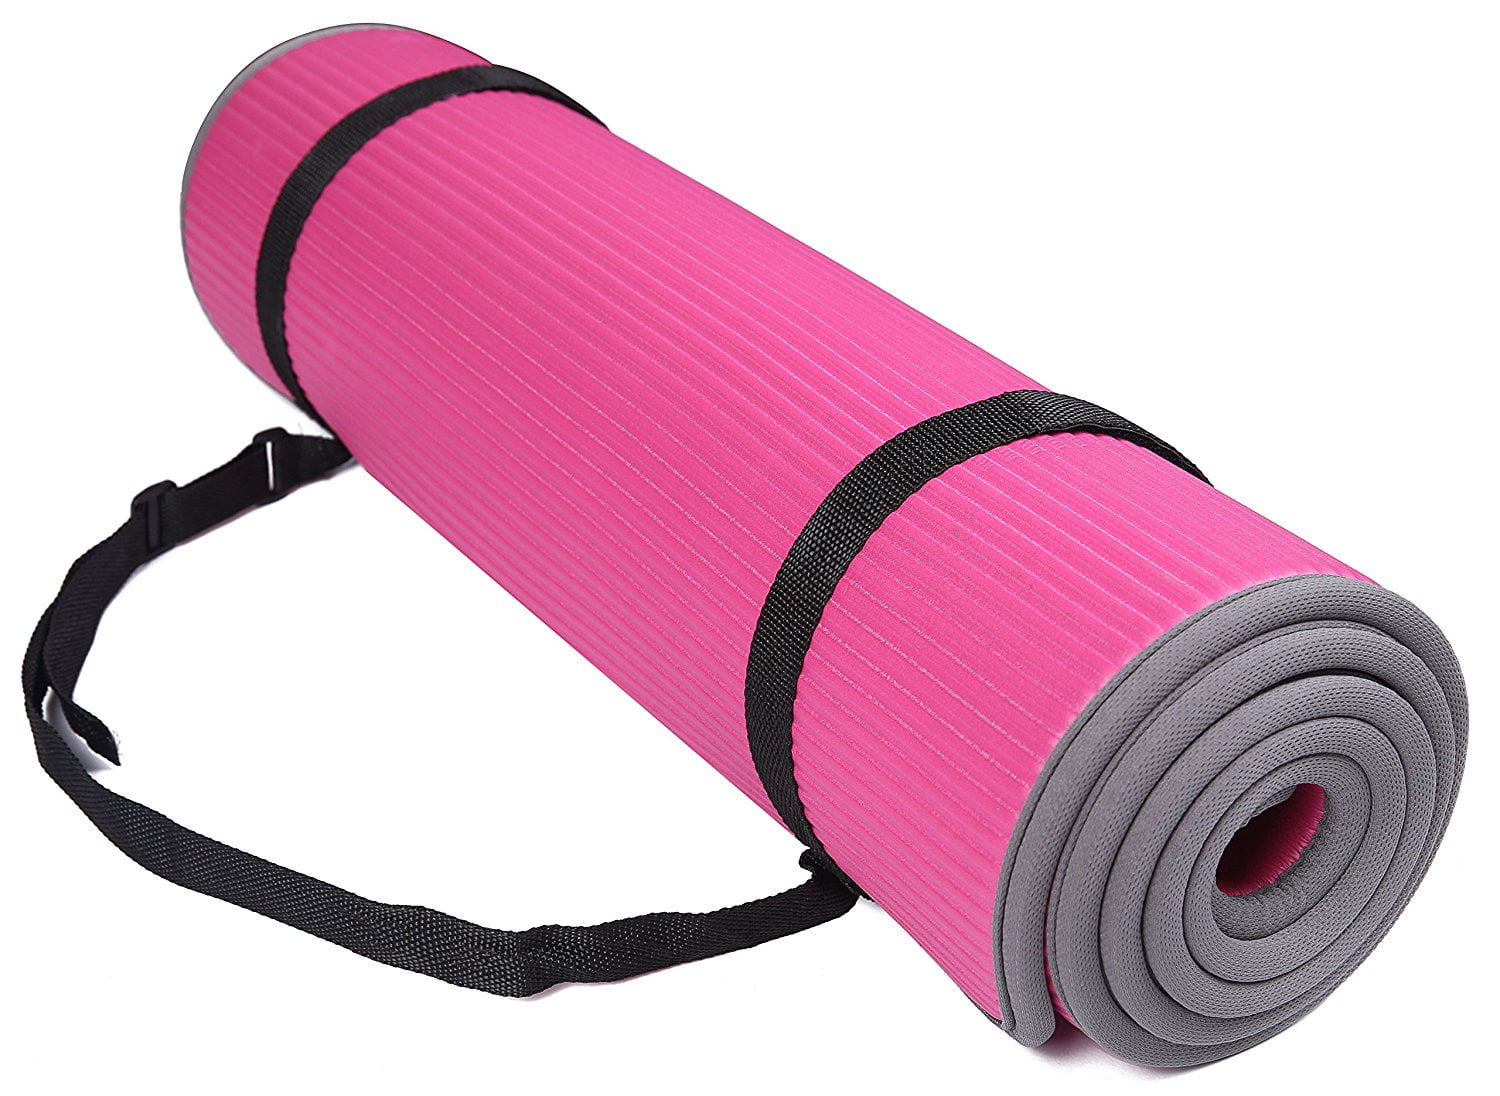 Feeltlu 10mm Extra Thick Yoga Mat Pink Gray